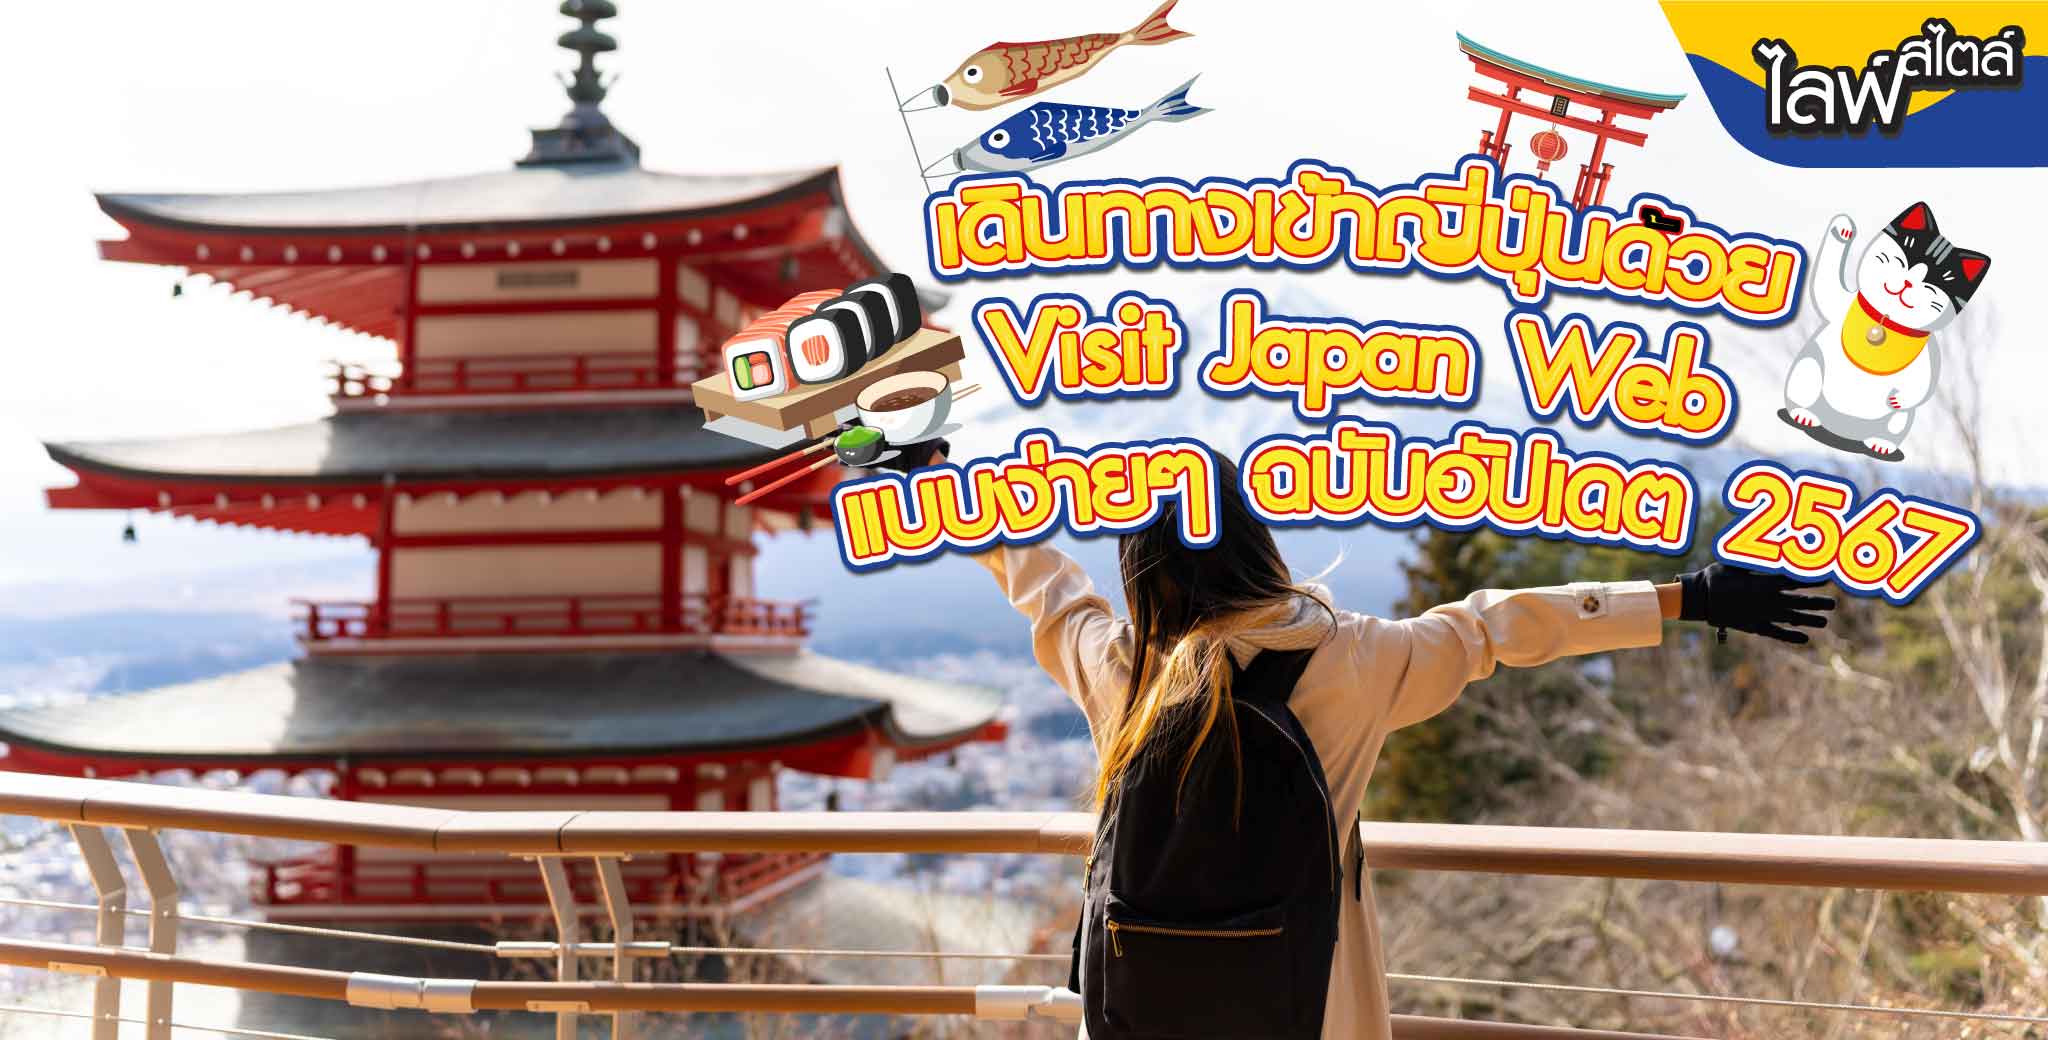 Visit Japan Web อัปเดตใหม่ล่าสุด 2567